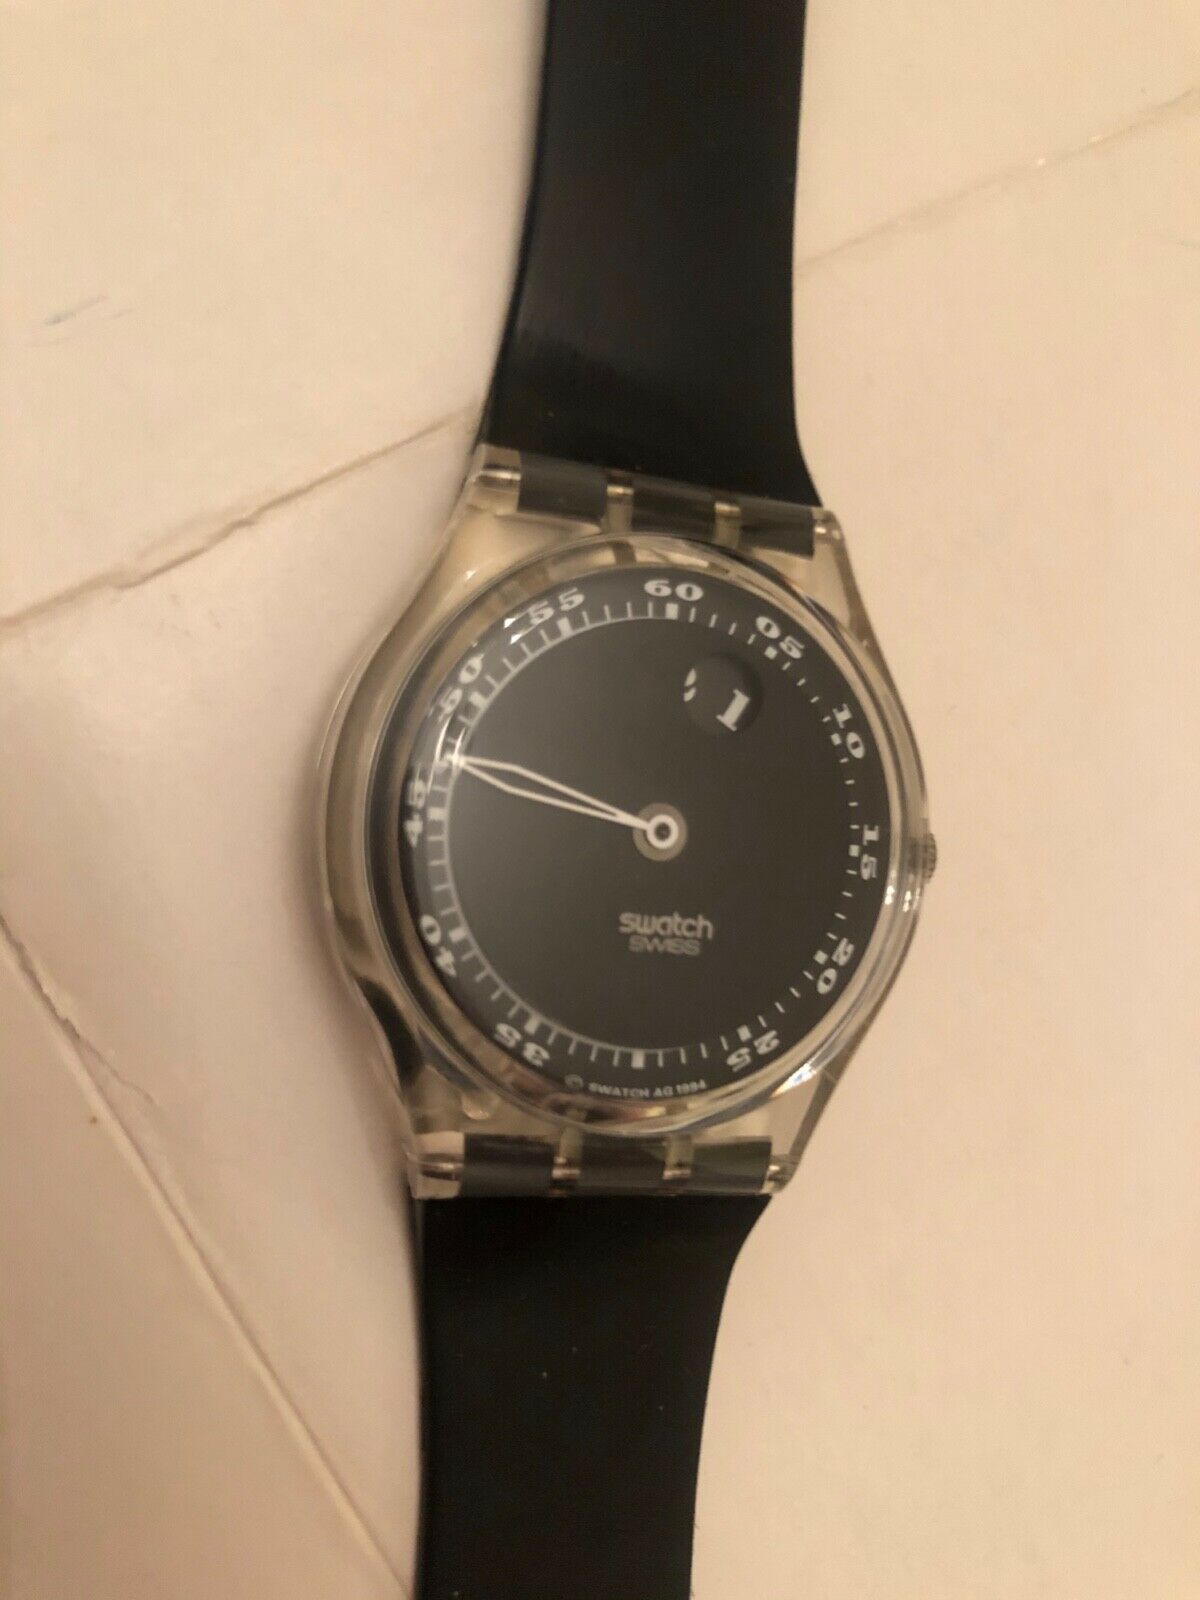 swatch watch gk182 upside down black on black vintage retro sweet